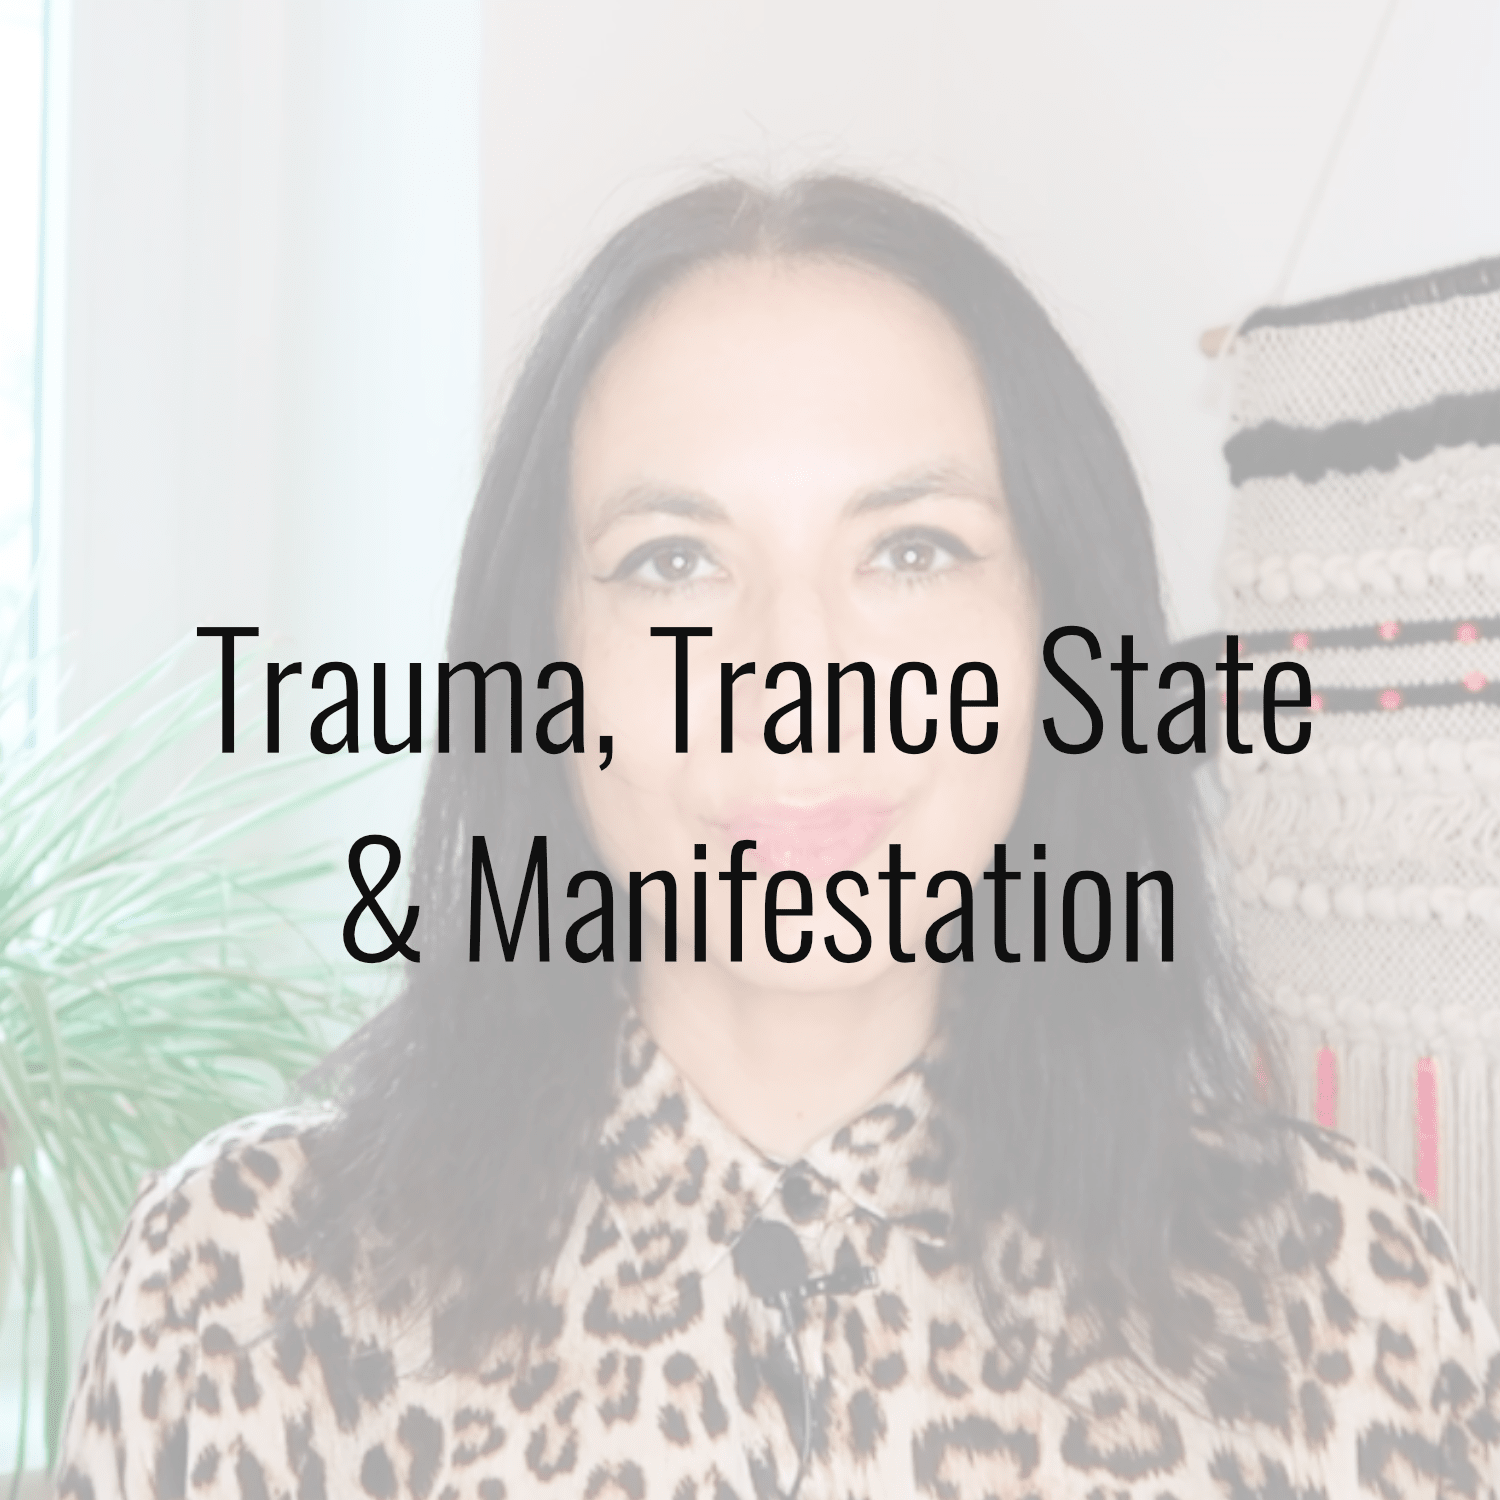 Trauma, Trance States & Manifestation